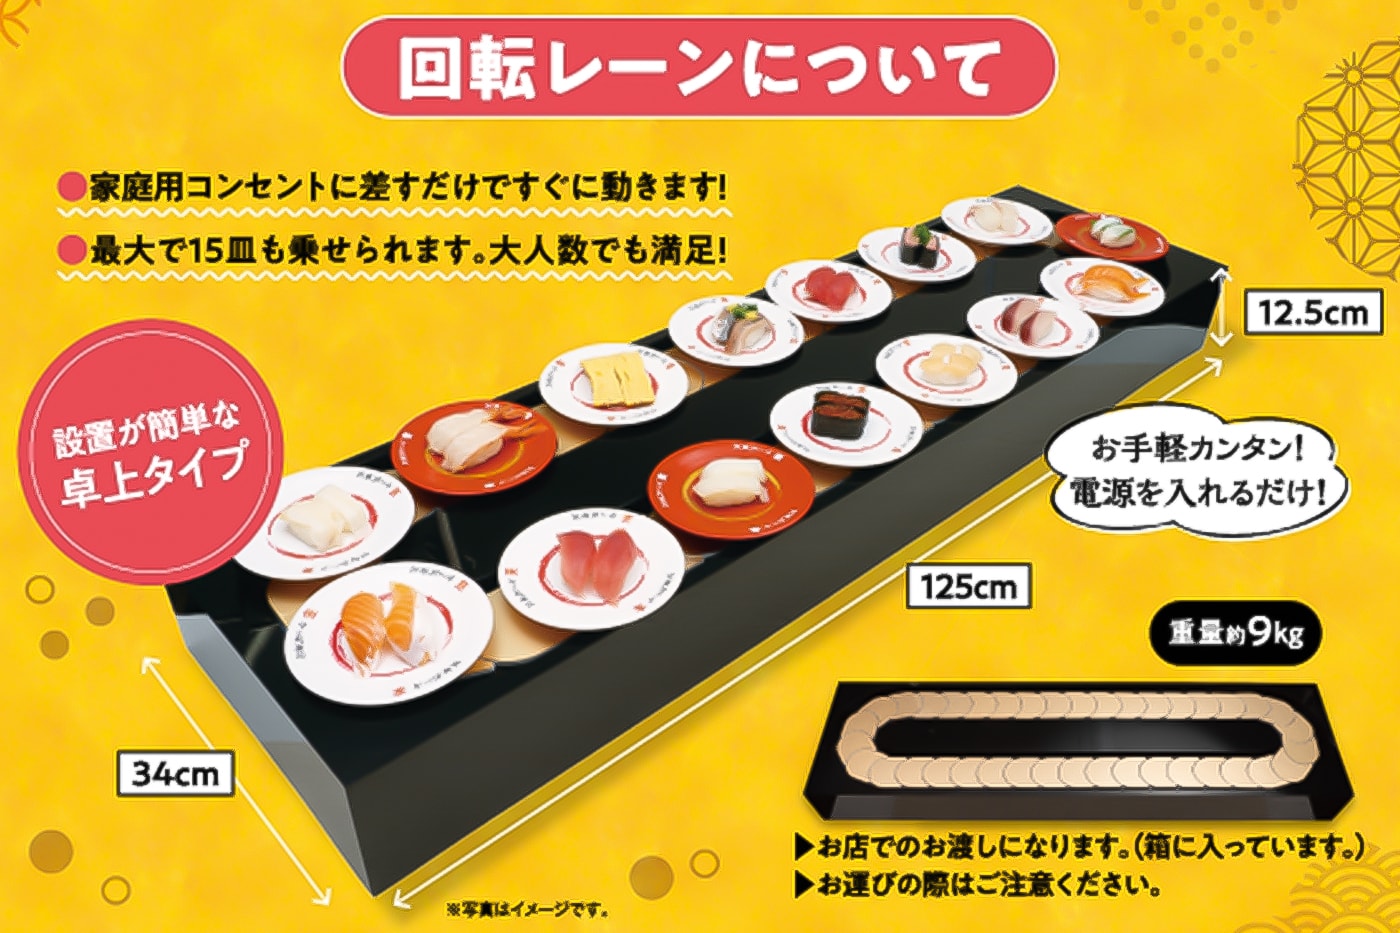 Kappa Sushi Conveyor Belt Rental Info Japan